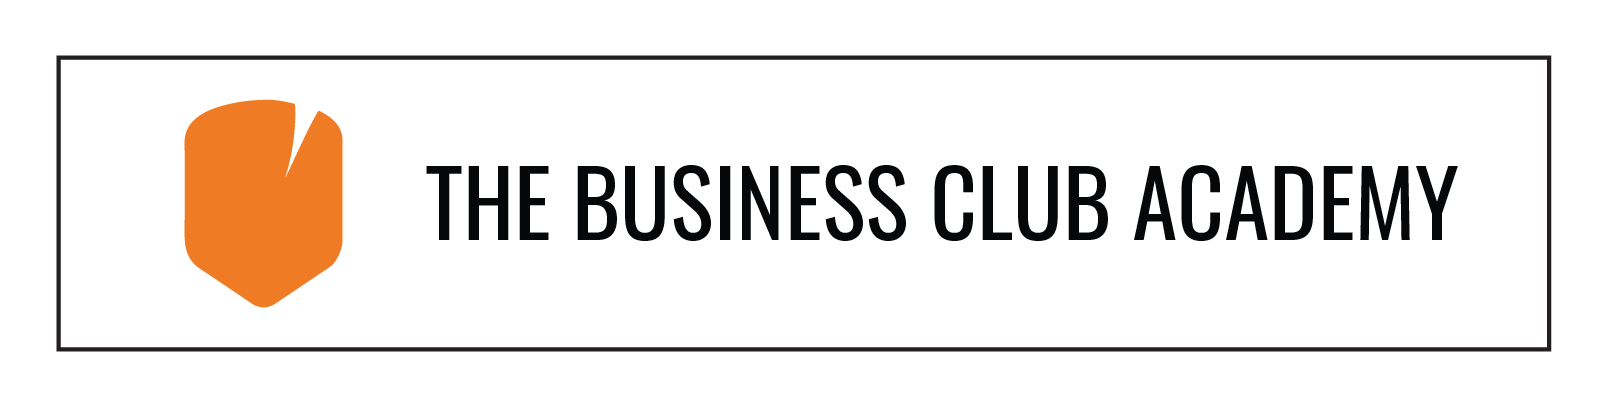 The Business Club Academy